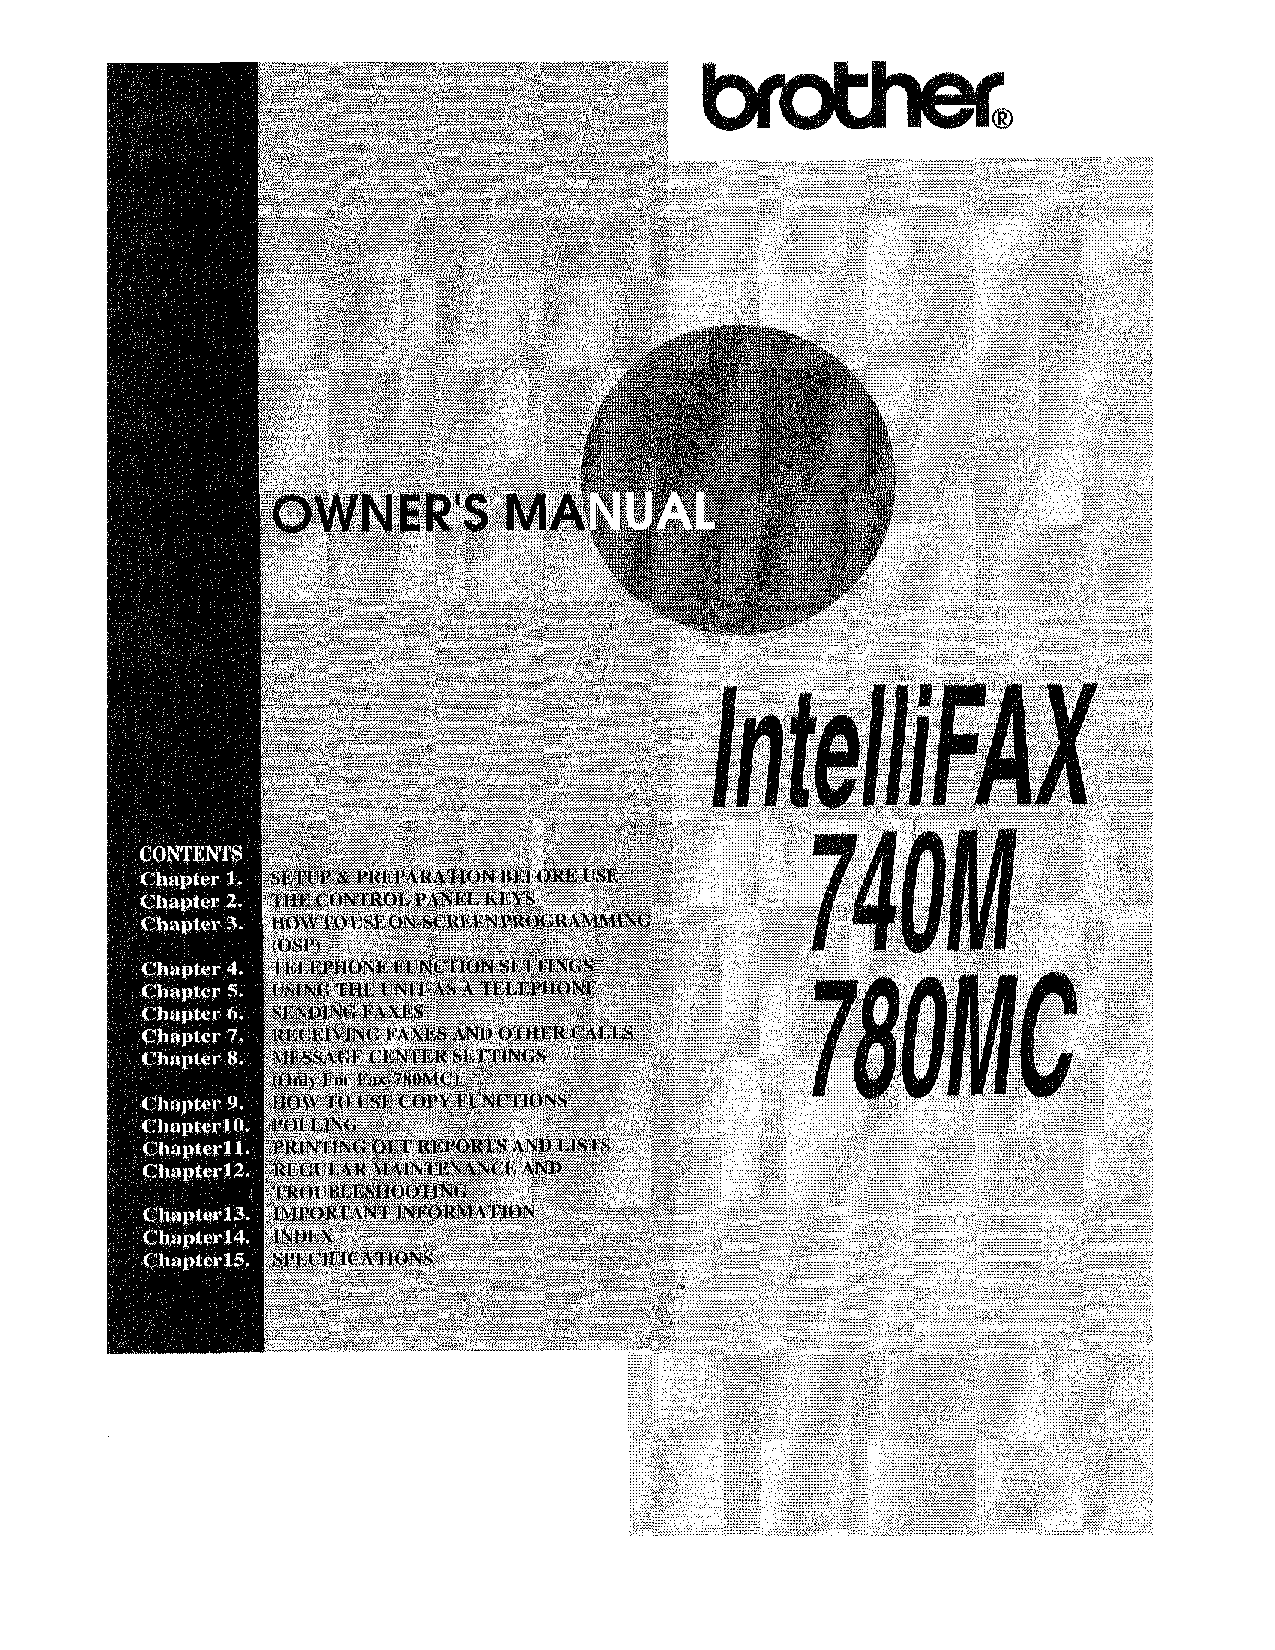 Brother 780MC, 740M User Manual